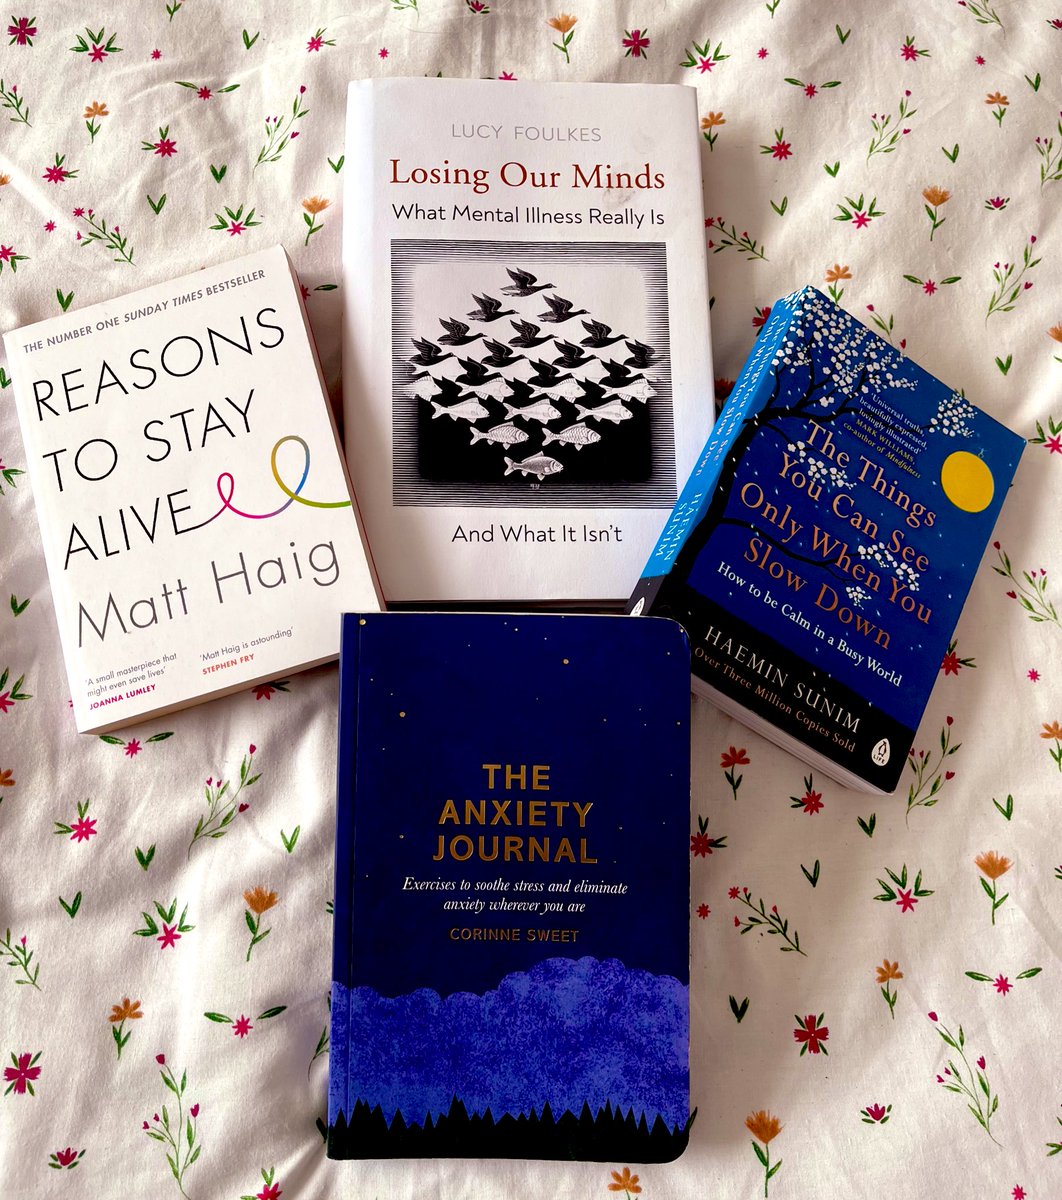 For #MentalHealthAwarenessWeek I wanted to share some of my favourite #books on #mentalhealth 💚 #mhaw #anxiety @matthaig1 @lfoulkesy @CorinneSweet @themonkamok